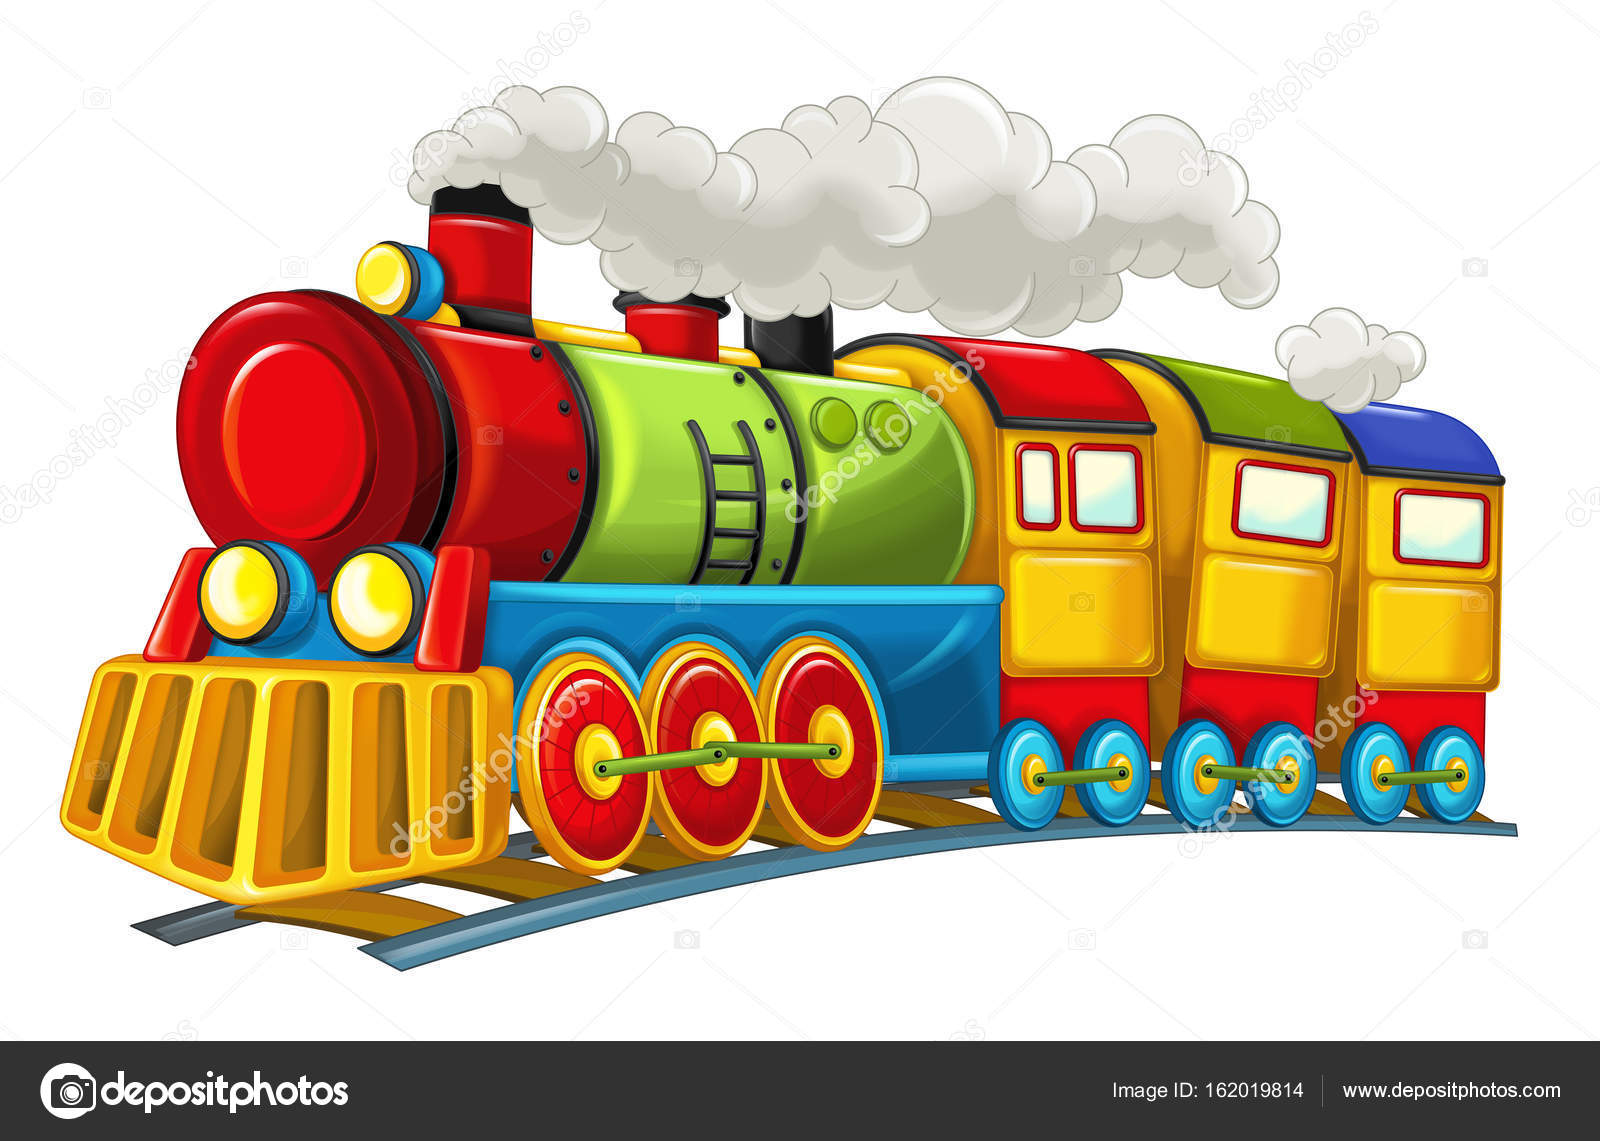 Cartoon funny looking steam train Stock Photo by ©illustrator_hft 162019814